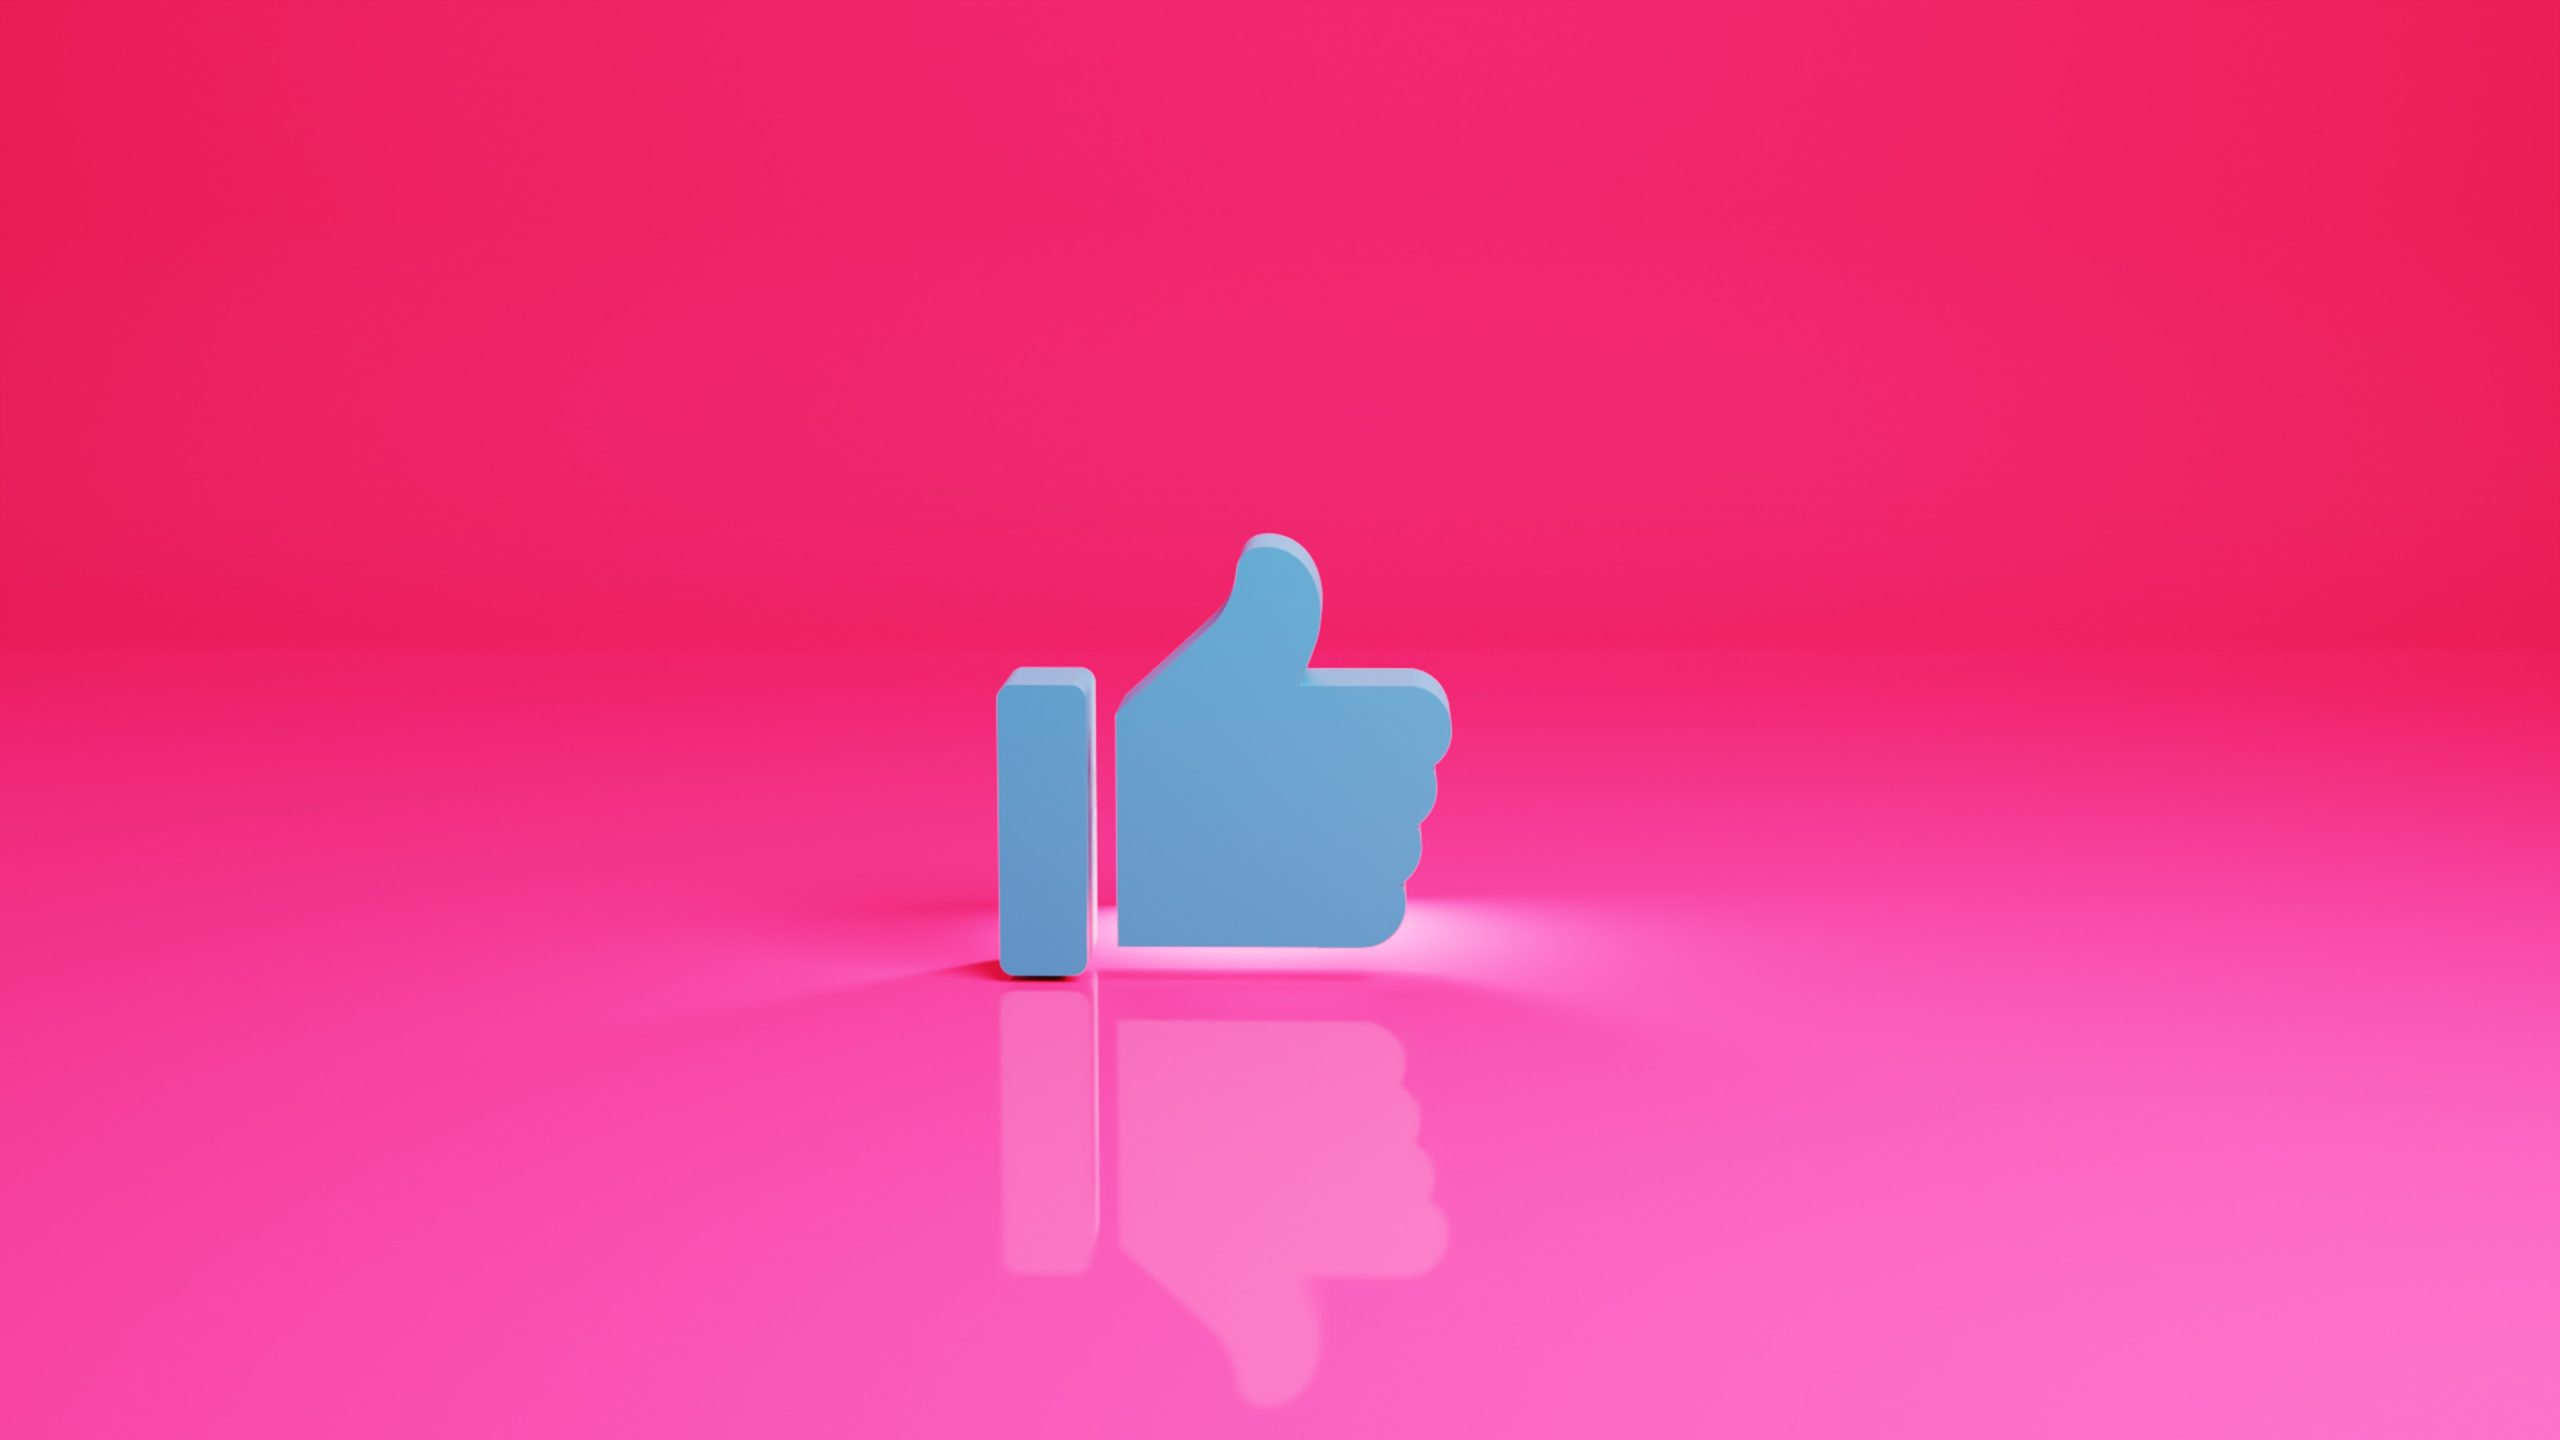 facebook likes symbol